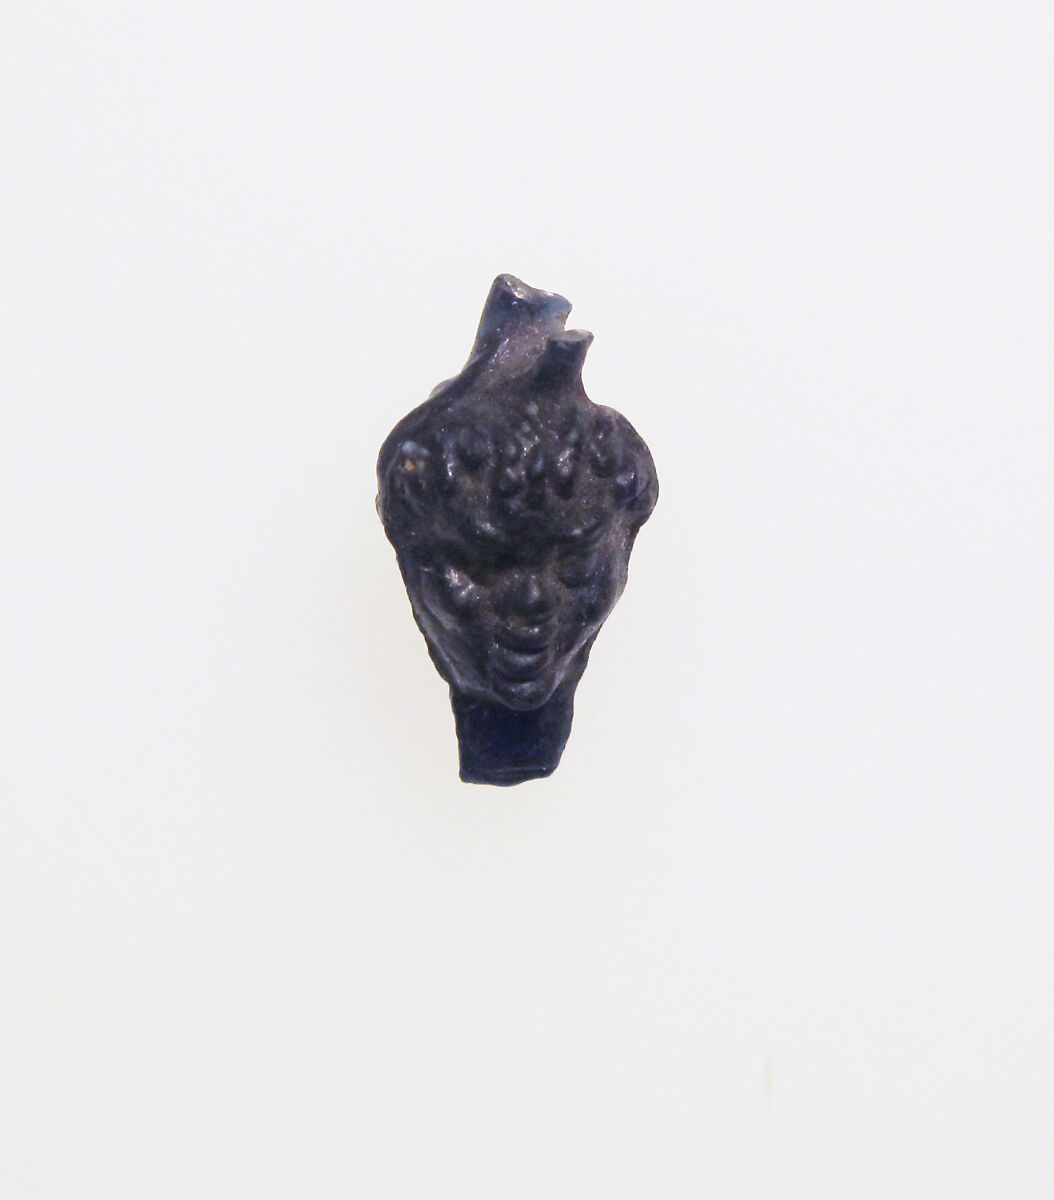 Glass pendant in the shape of a Black African’s head, Glass, Greek, Eastern Mediterranean 